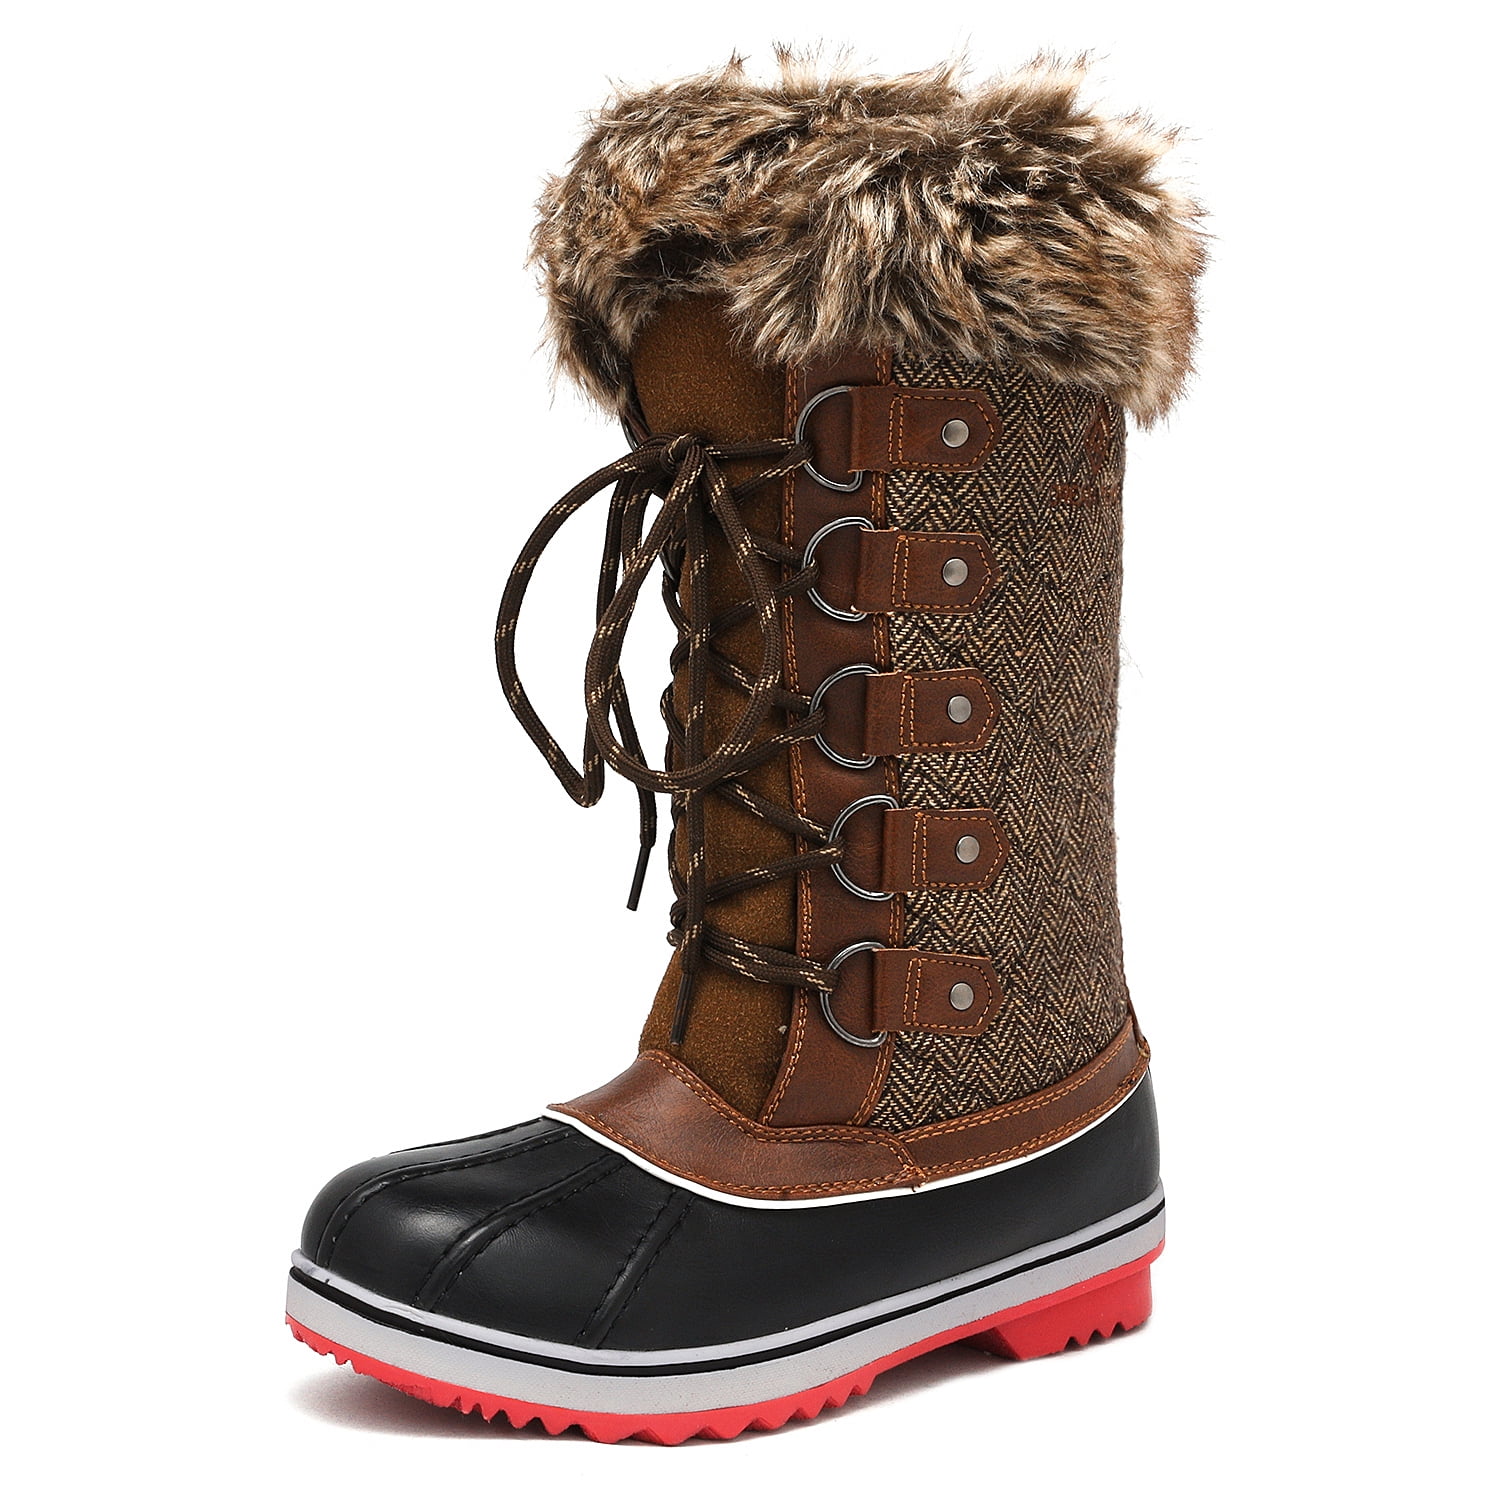 women's size 11 snow boots